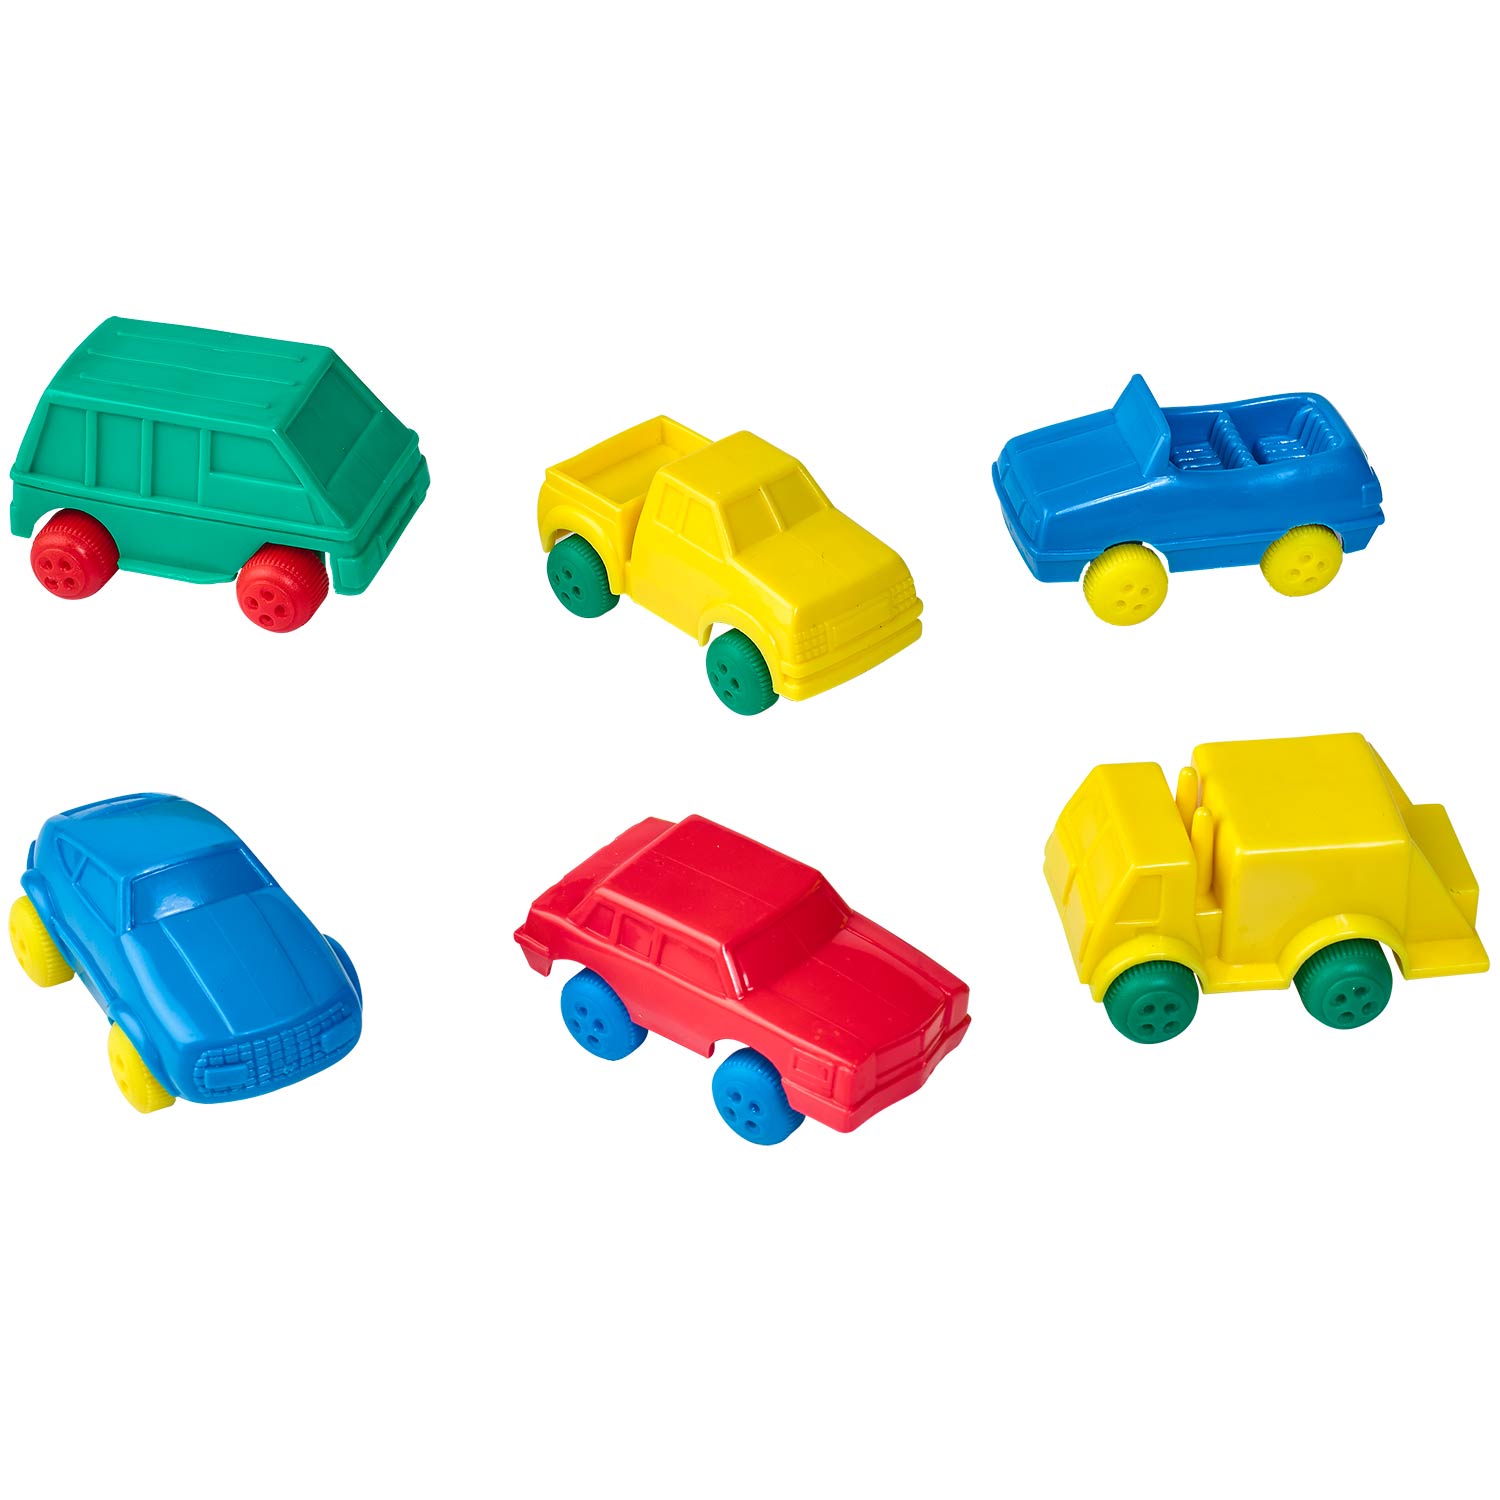 Indestructible Flexible Vehicles, 36 Piece Set